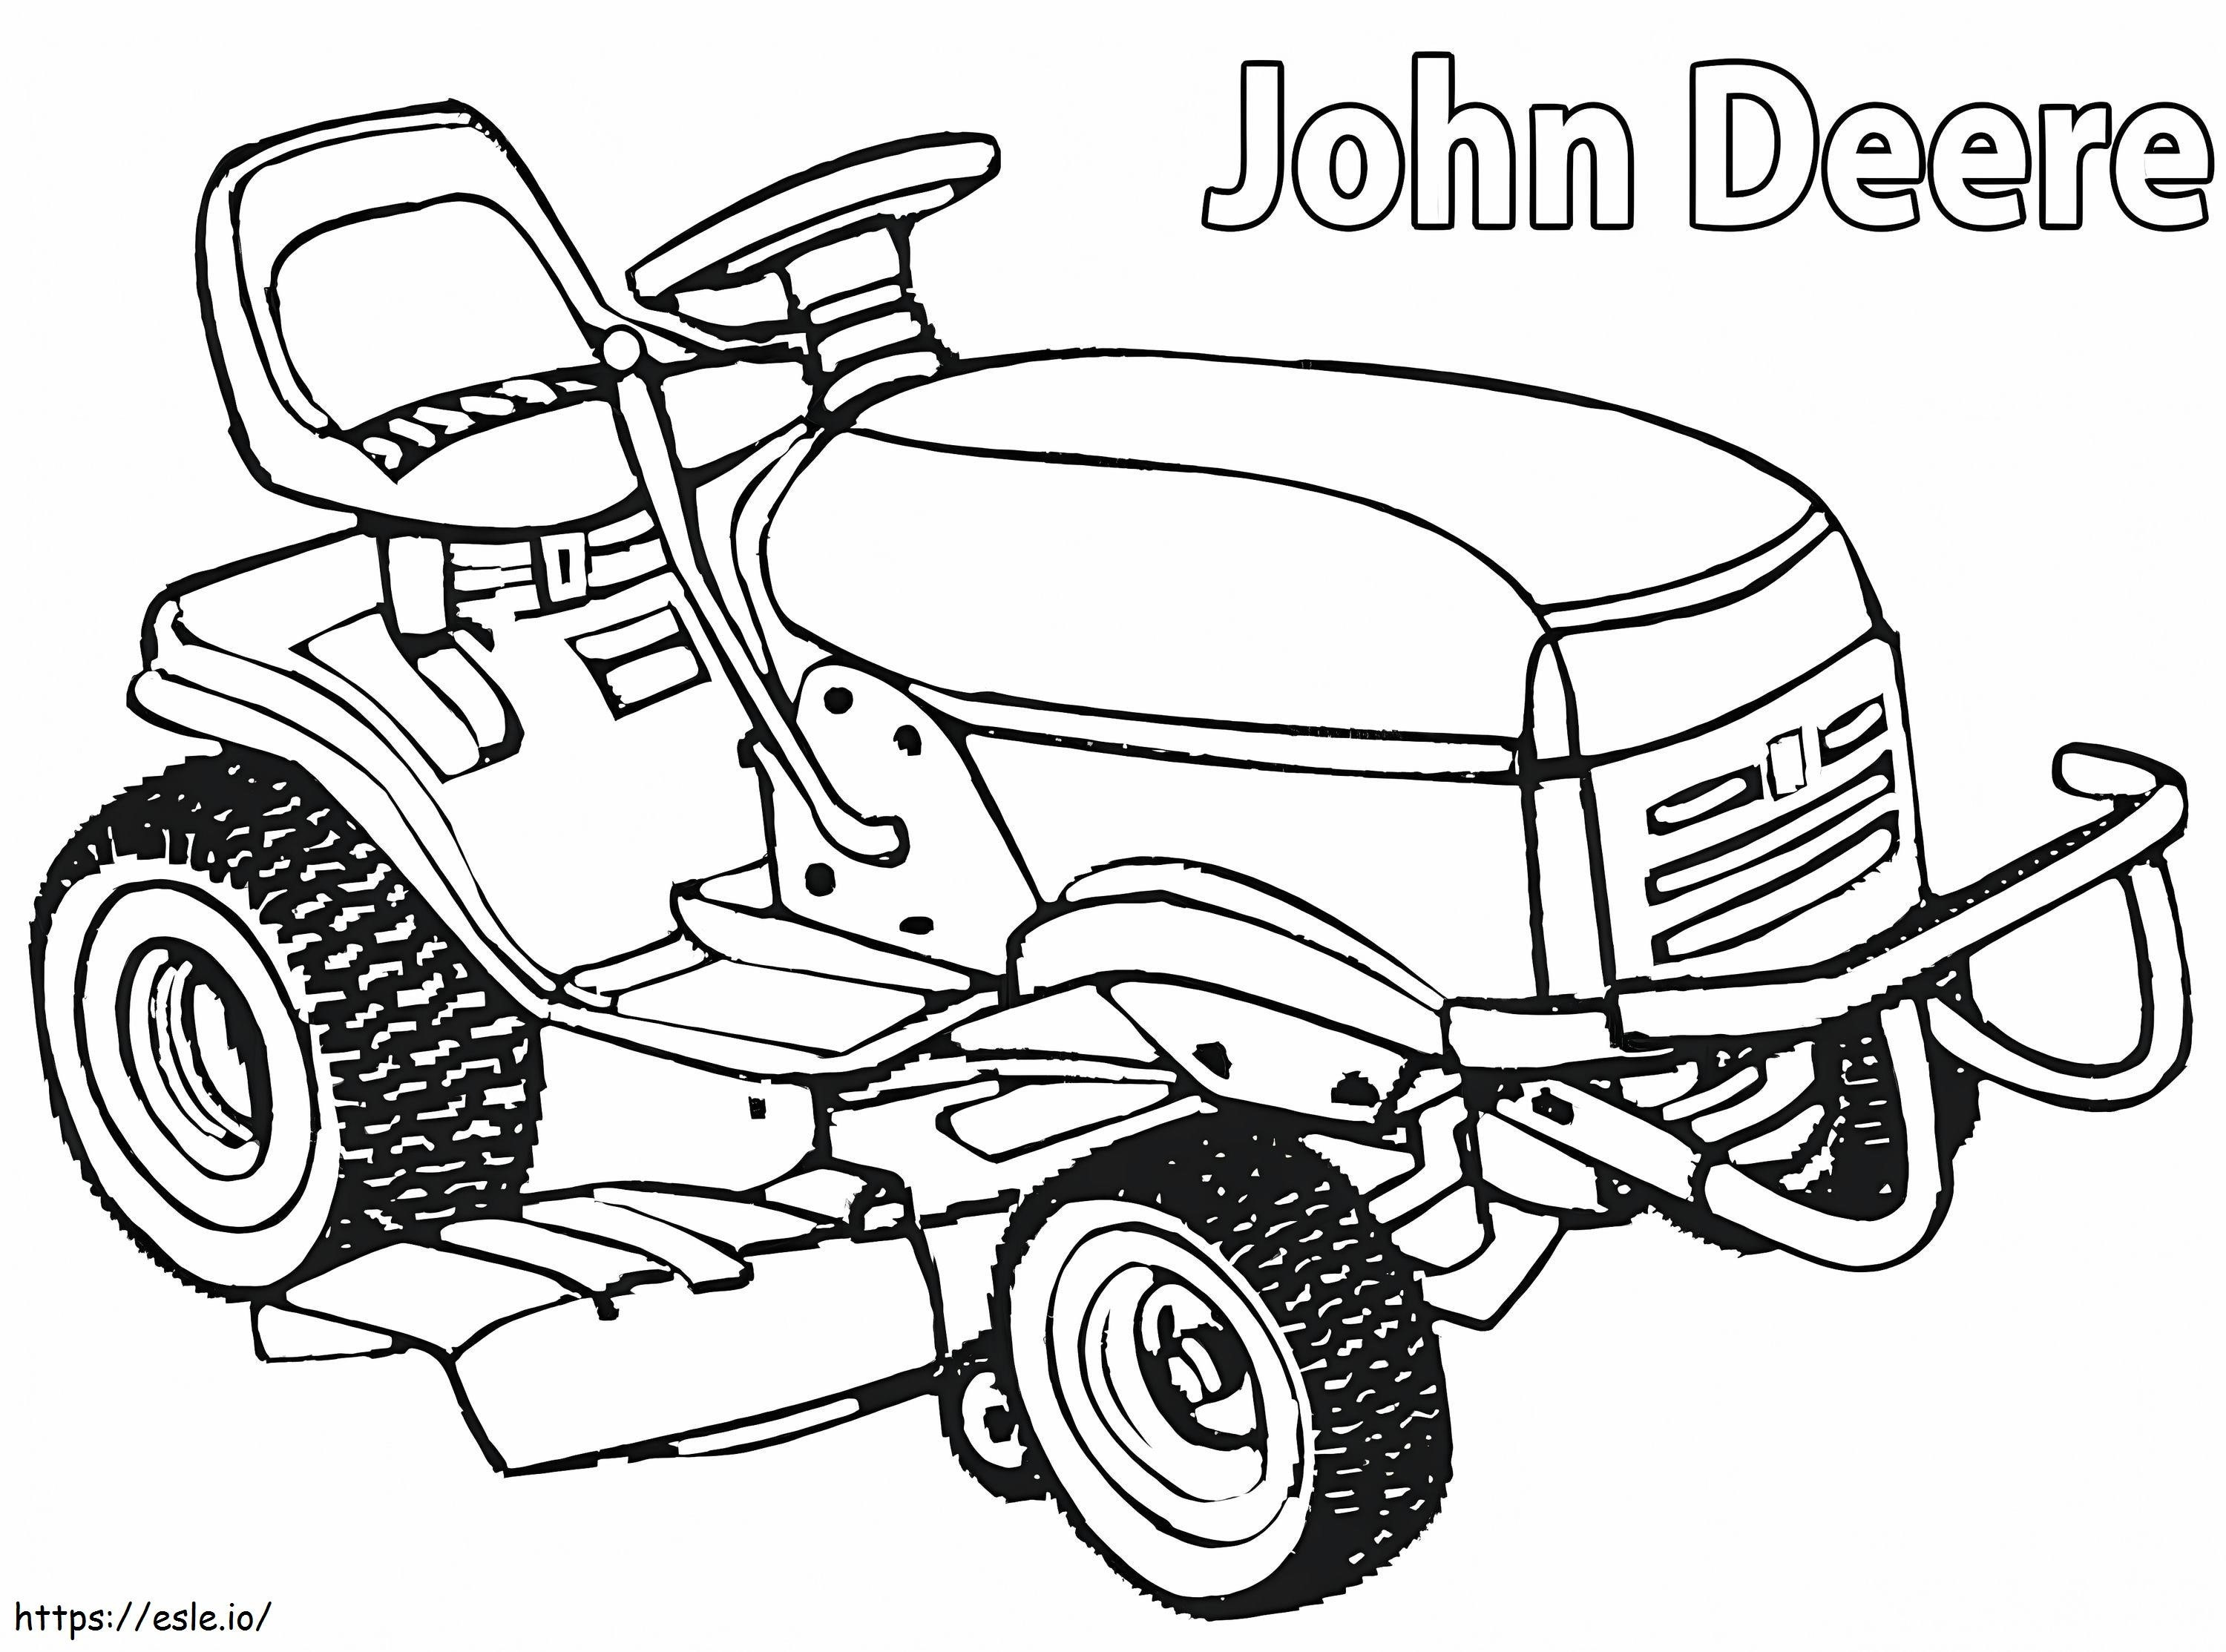 John Deere3 kleurplaat kleurplaat